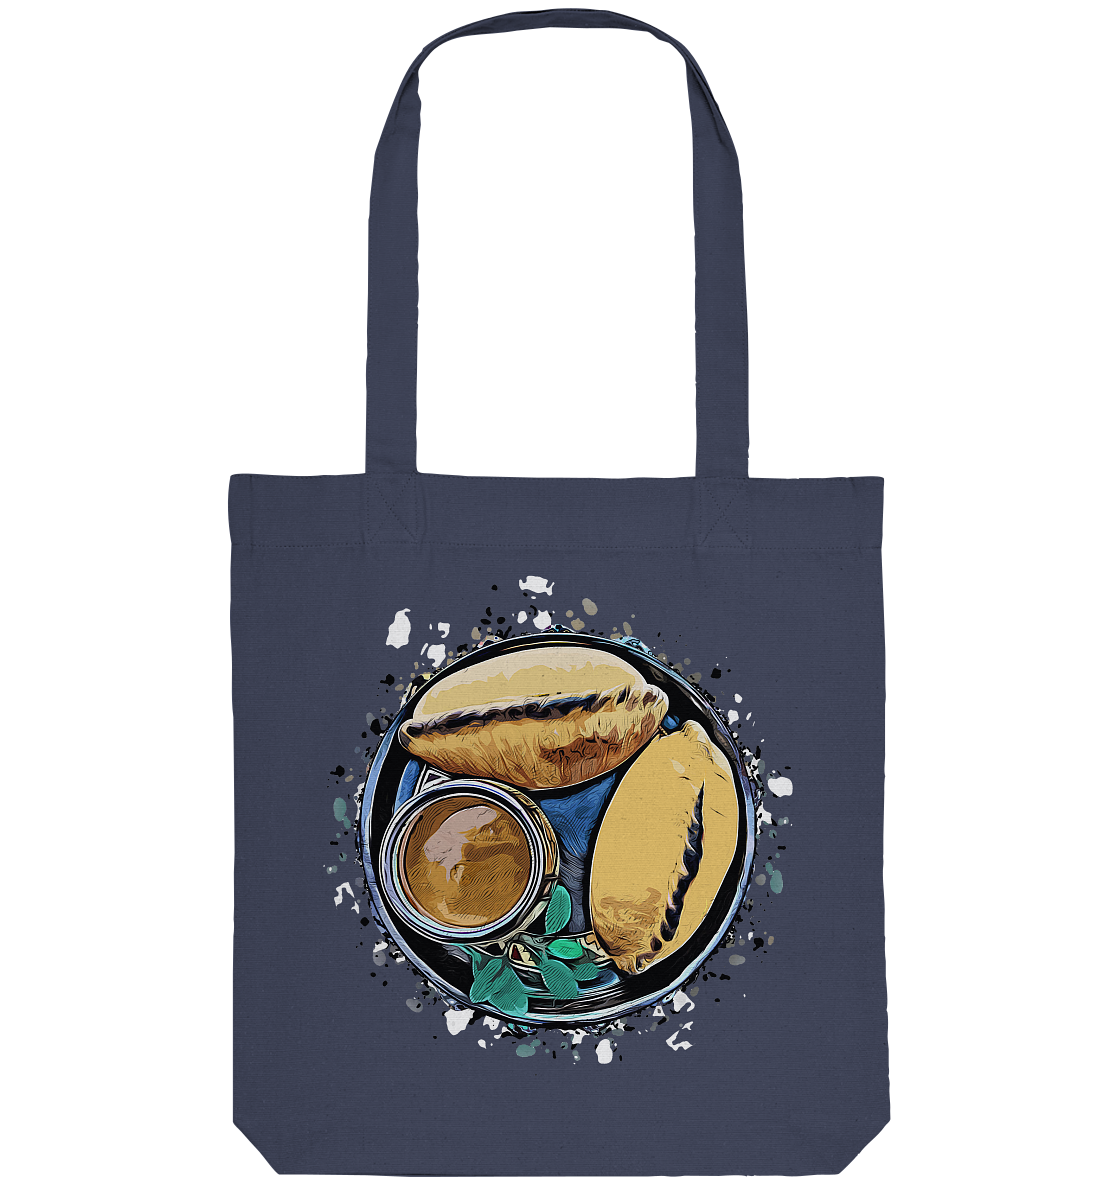 
                  
                    Shopping bag Salteñas - Ecológico (80% algodón reciclado, varios colores)
                  
                